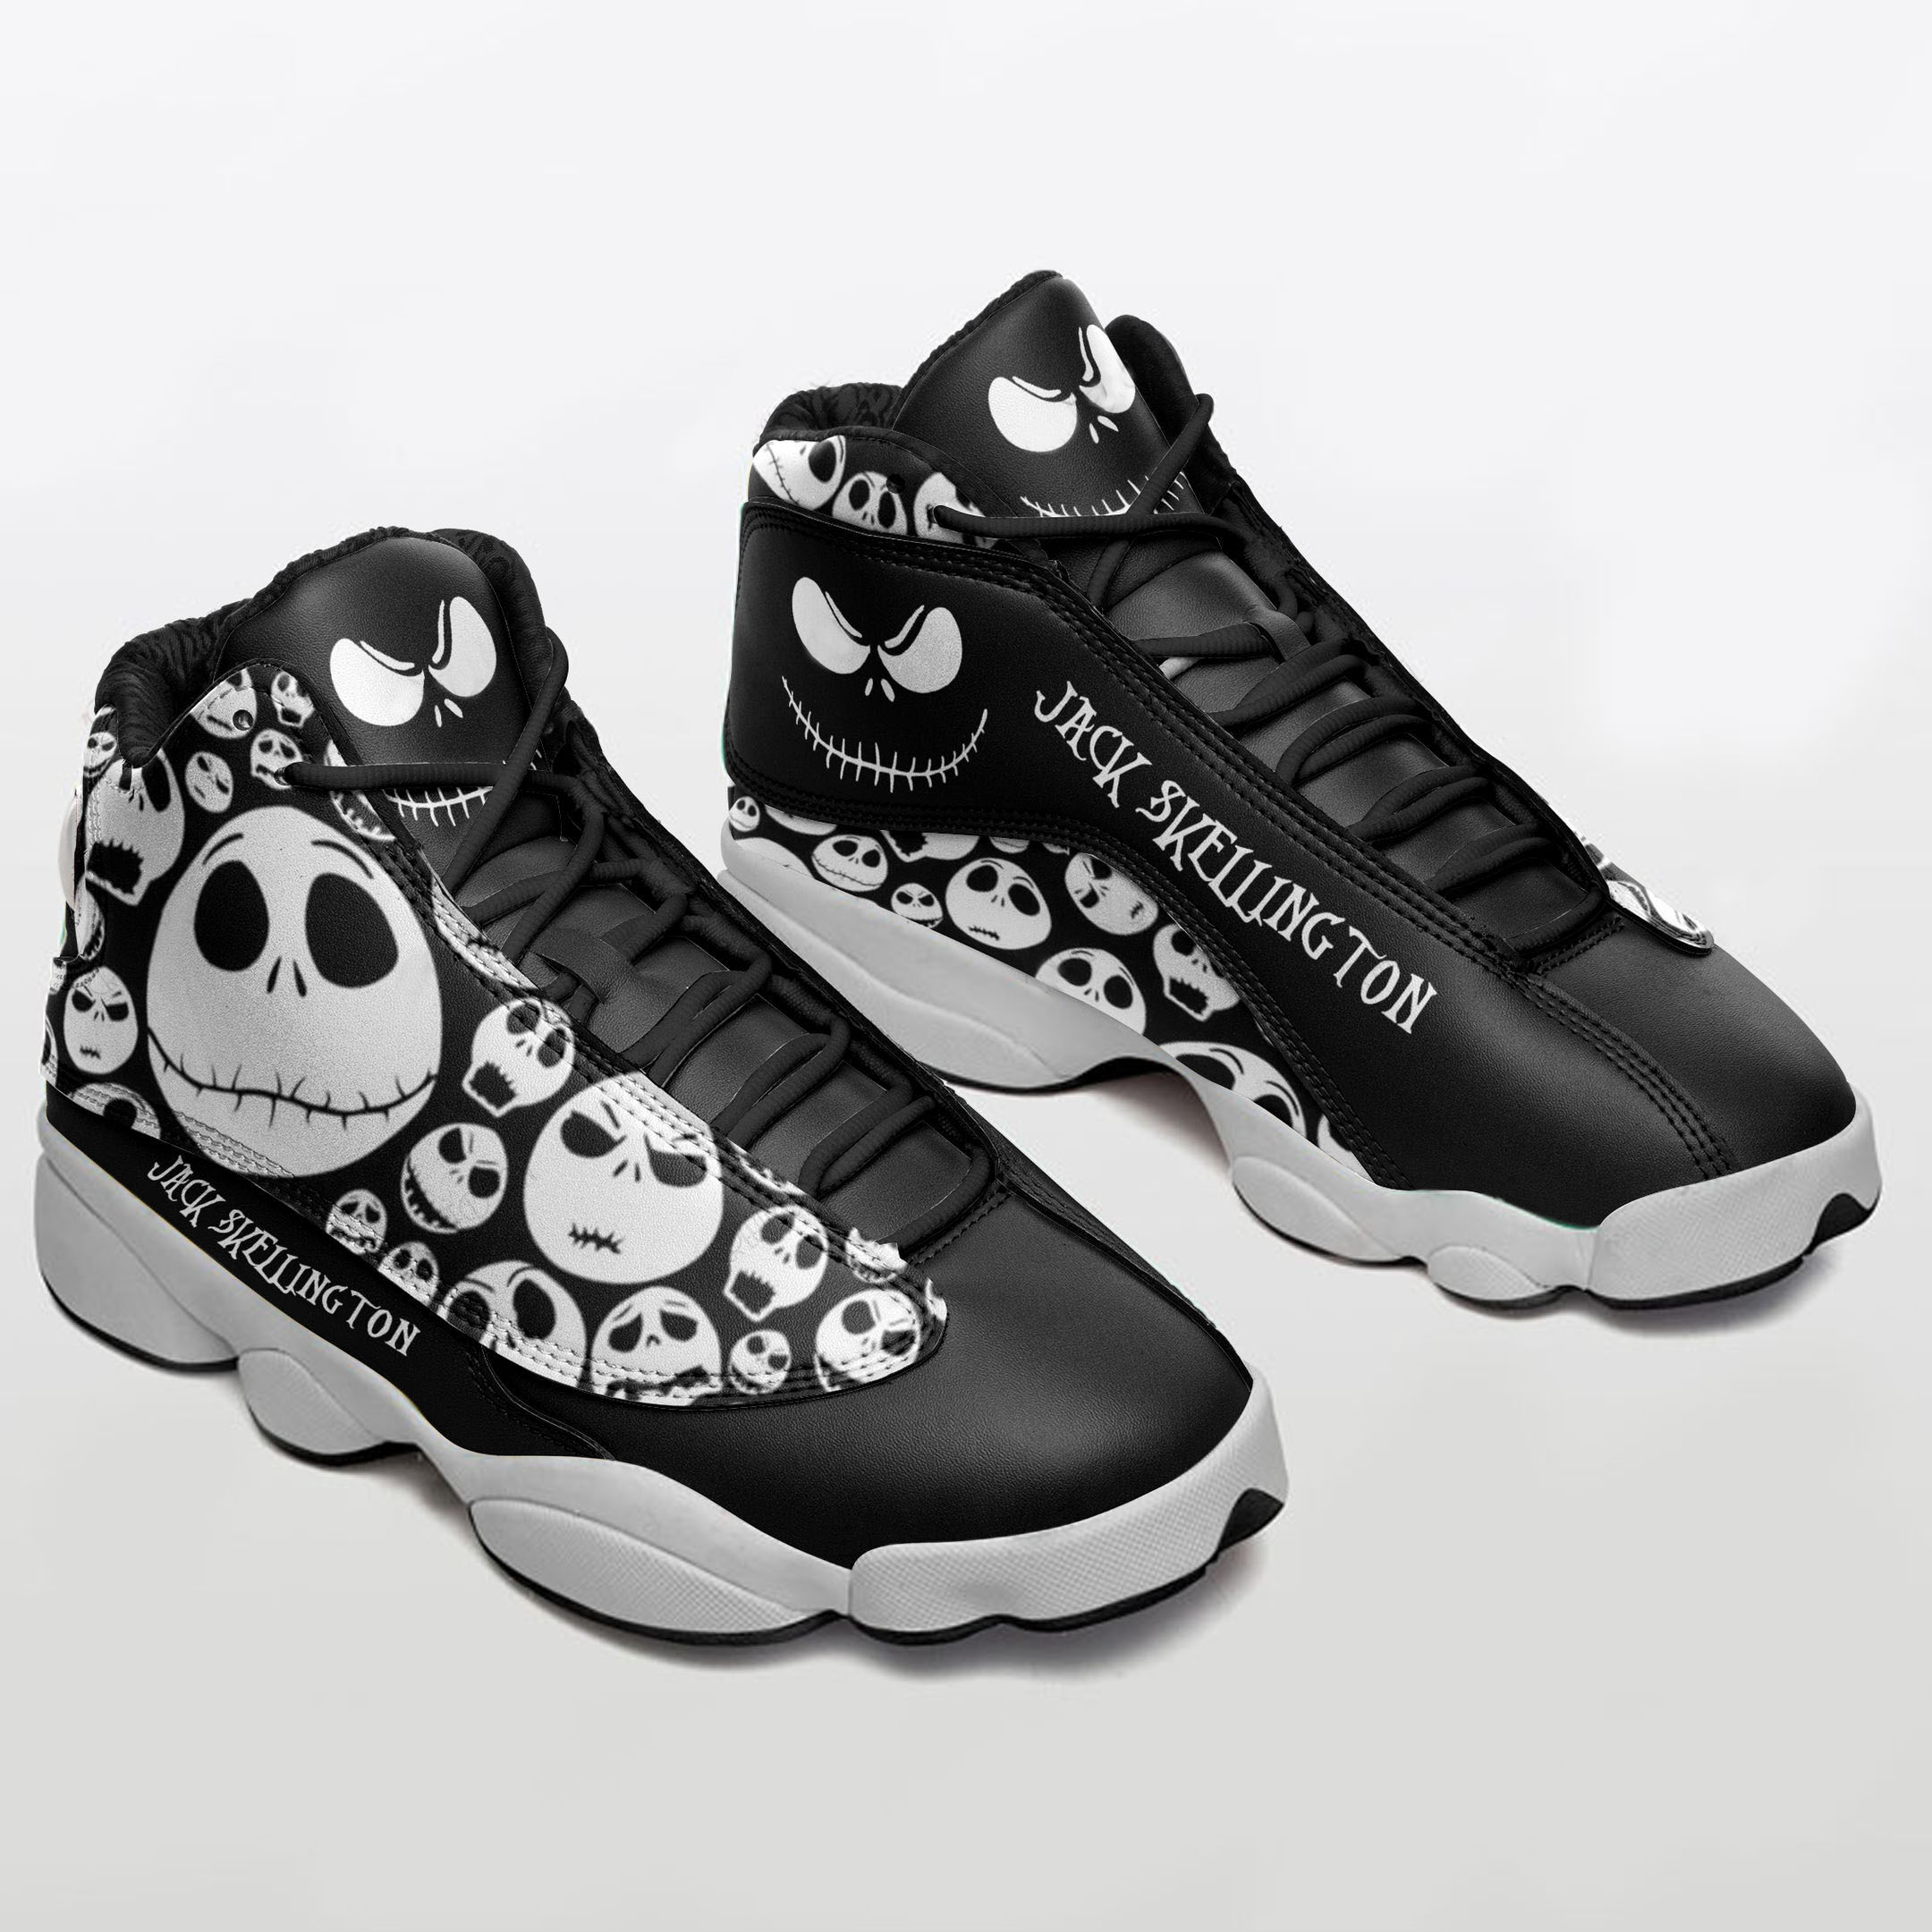 Jack Skellington Air Jordan 13 Sneaker Shoes - It's RobinLoriNOW!